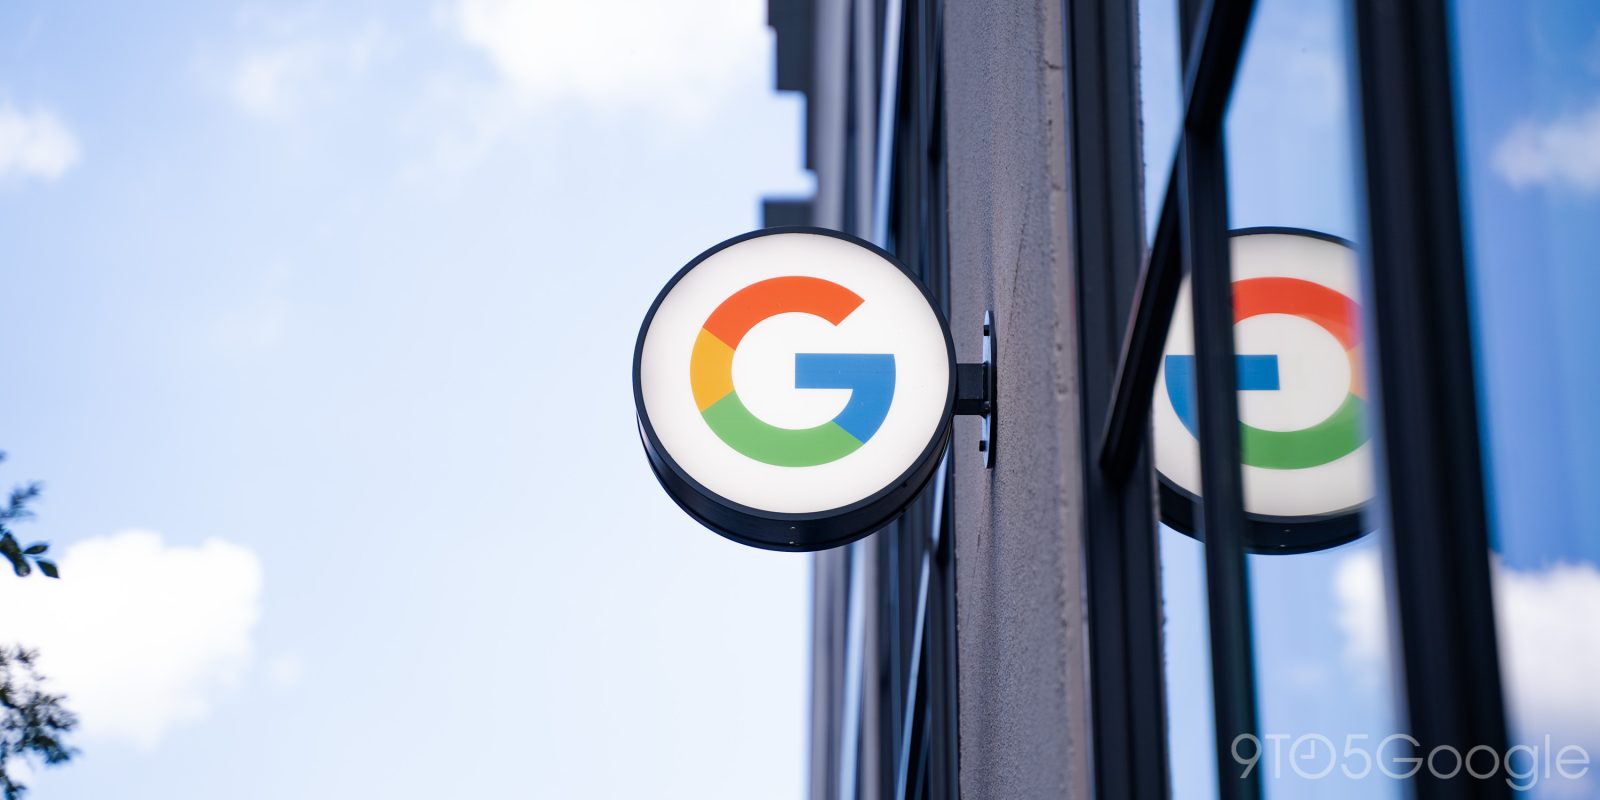 Google logo in Chelsea, NYC